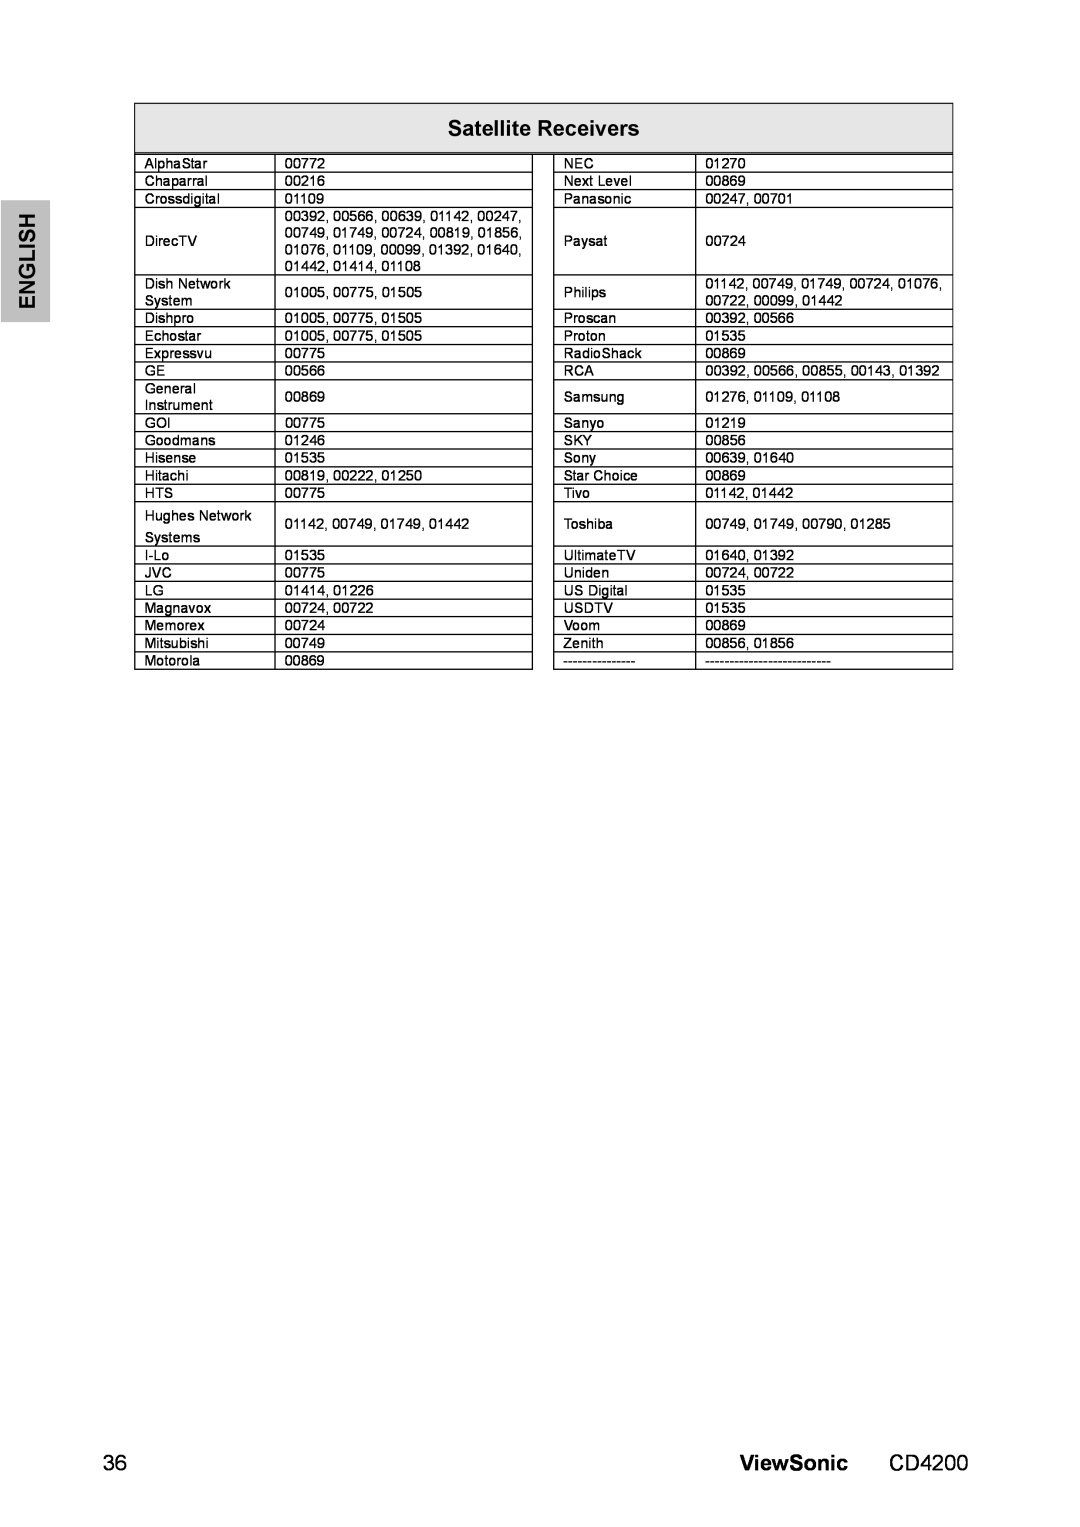 ViewSonic CD4200 manual Satellite Receivers, English, ViewSonic 